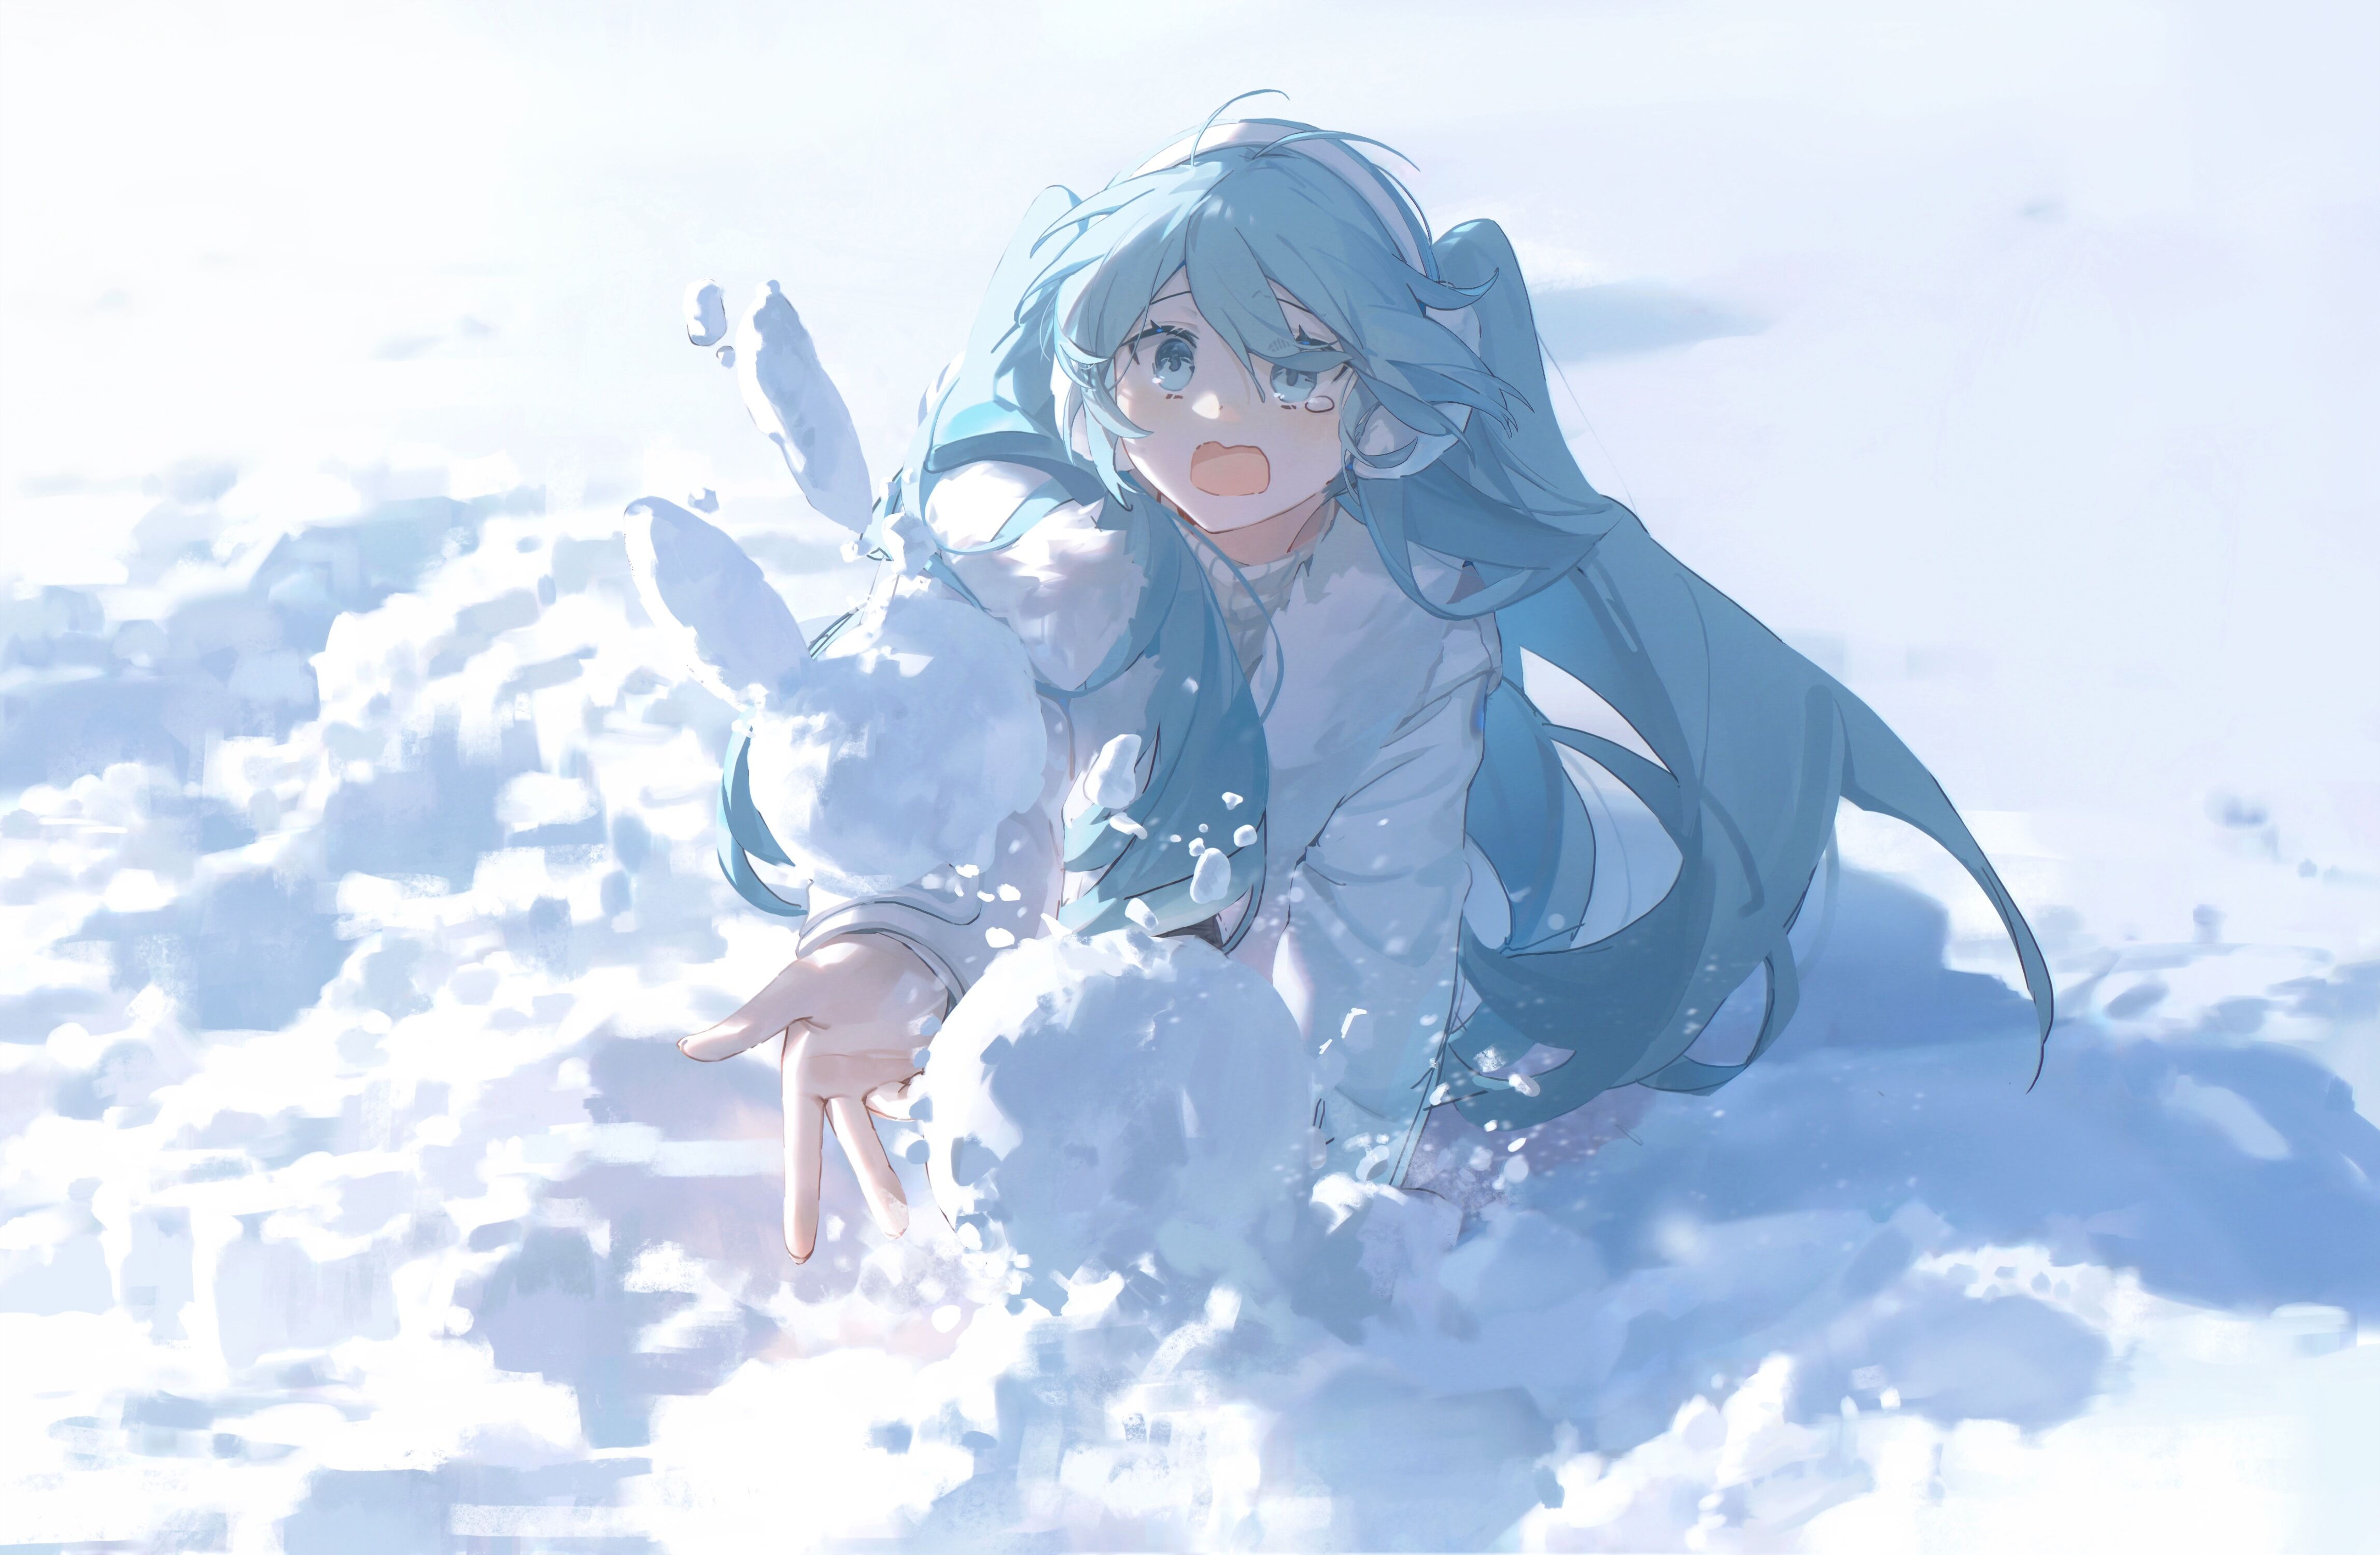 Anime 4591x3000 Pixiv anime anime girls Vocaloid Hatsune Miku long hair snow arms reaching coats ear muffs winter tears twintails rabbits